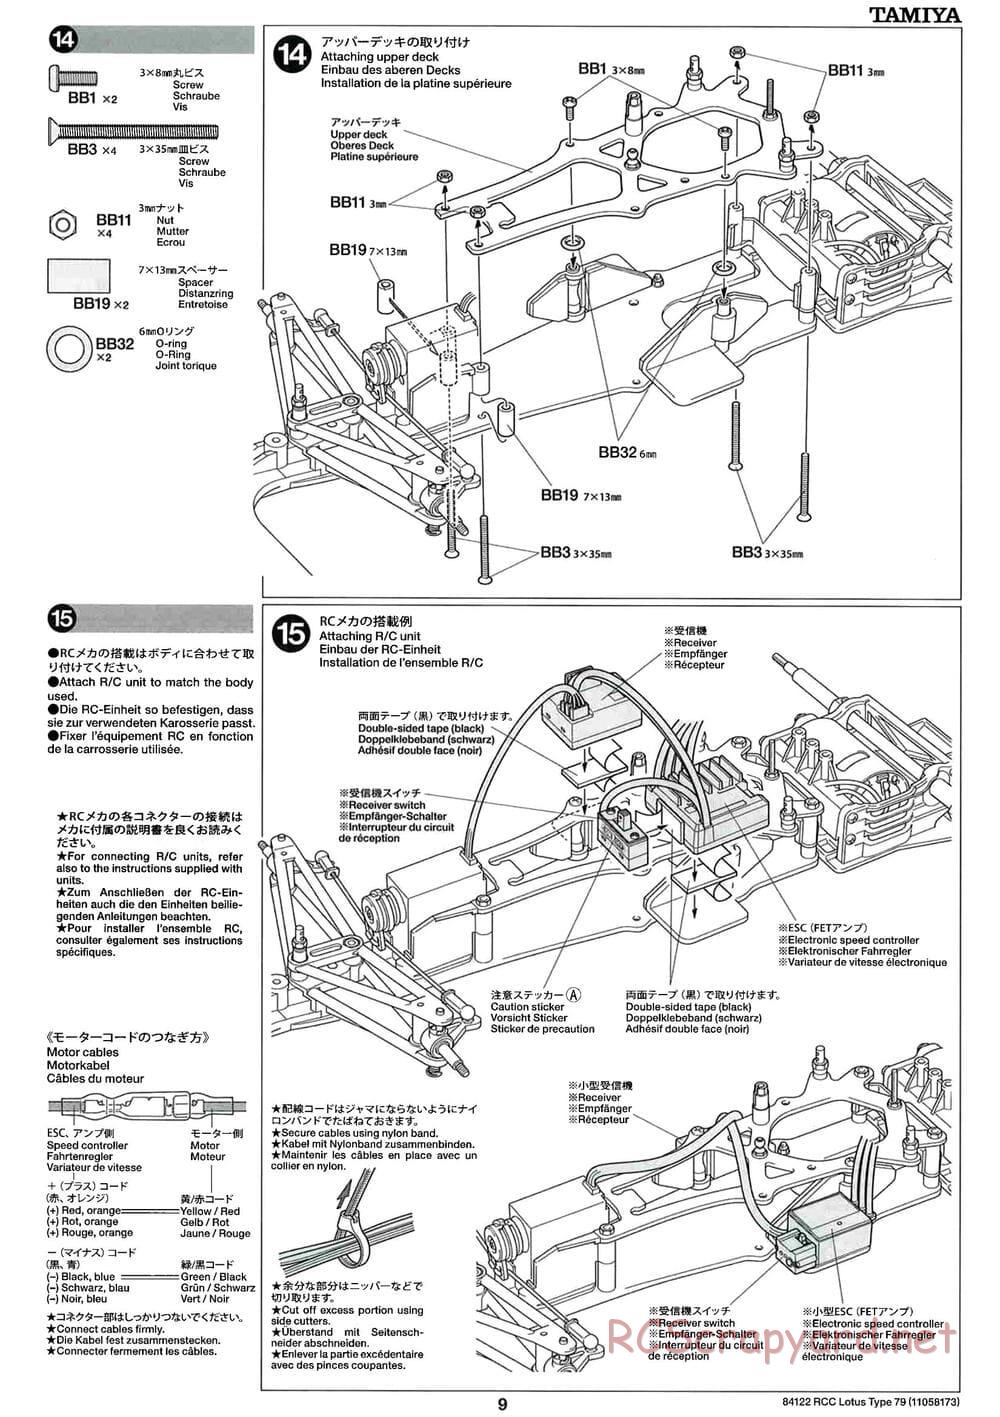 Tamiya - Lotus Type 79 - F104W Chassis - Manual - Page 9